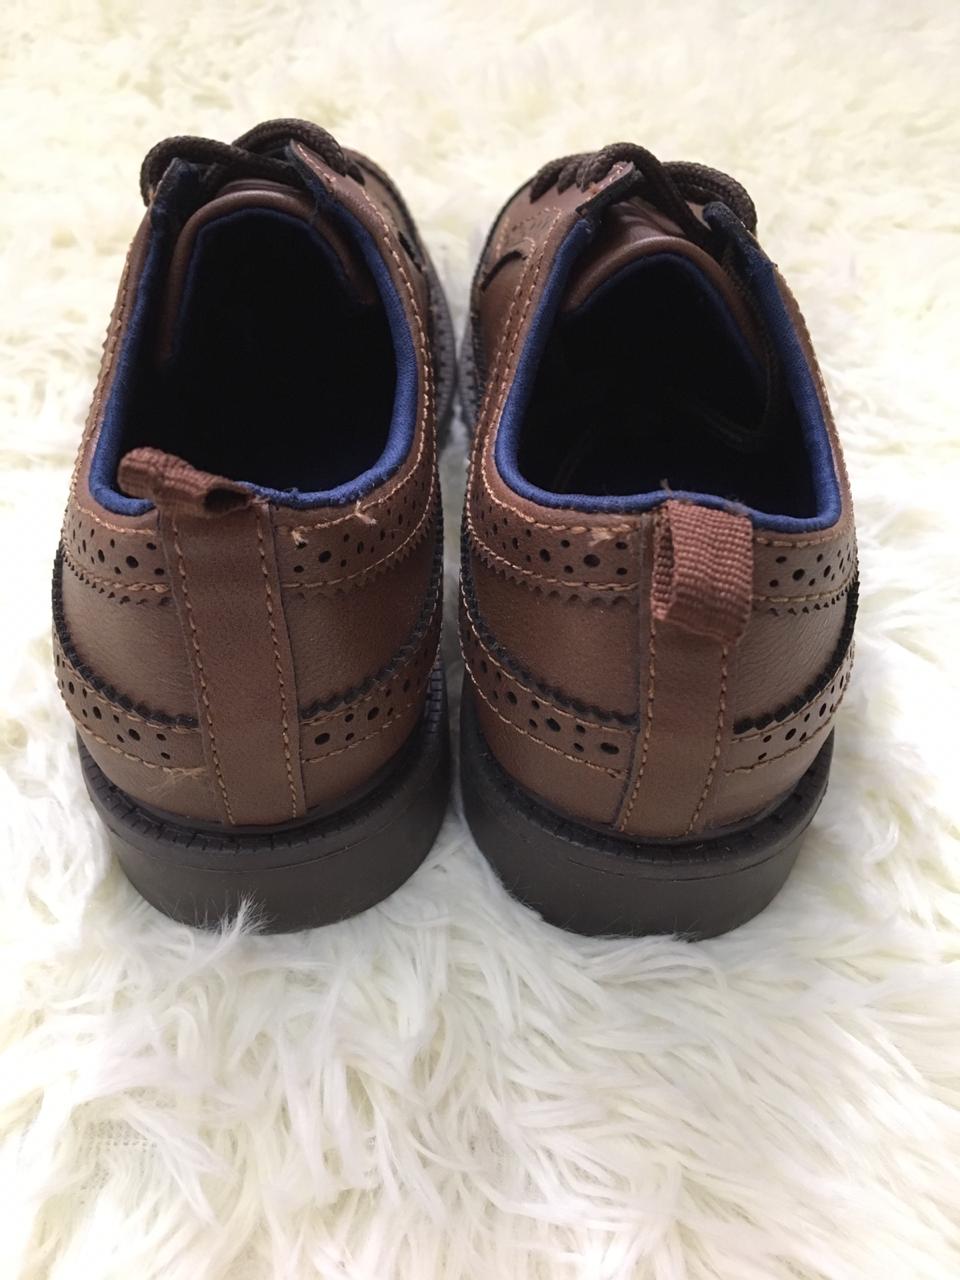 zapatos CARTER'S original de niños marrones con azul marino por dentro